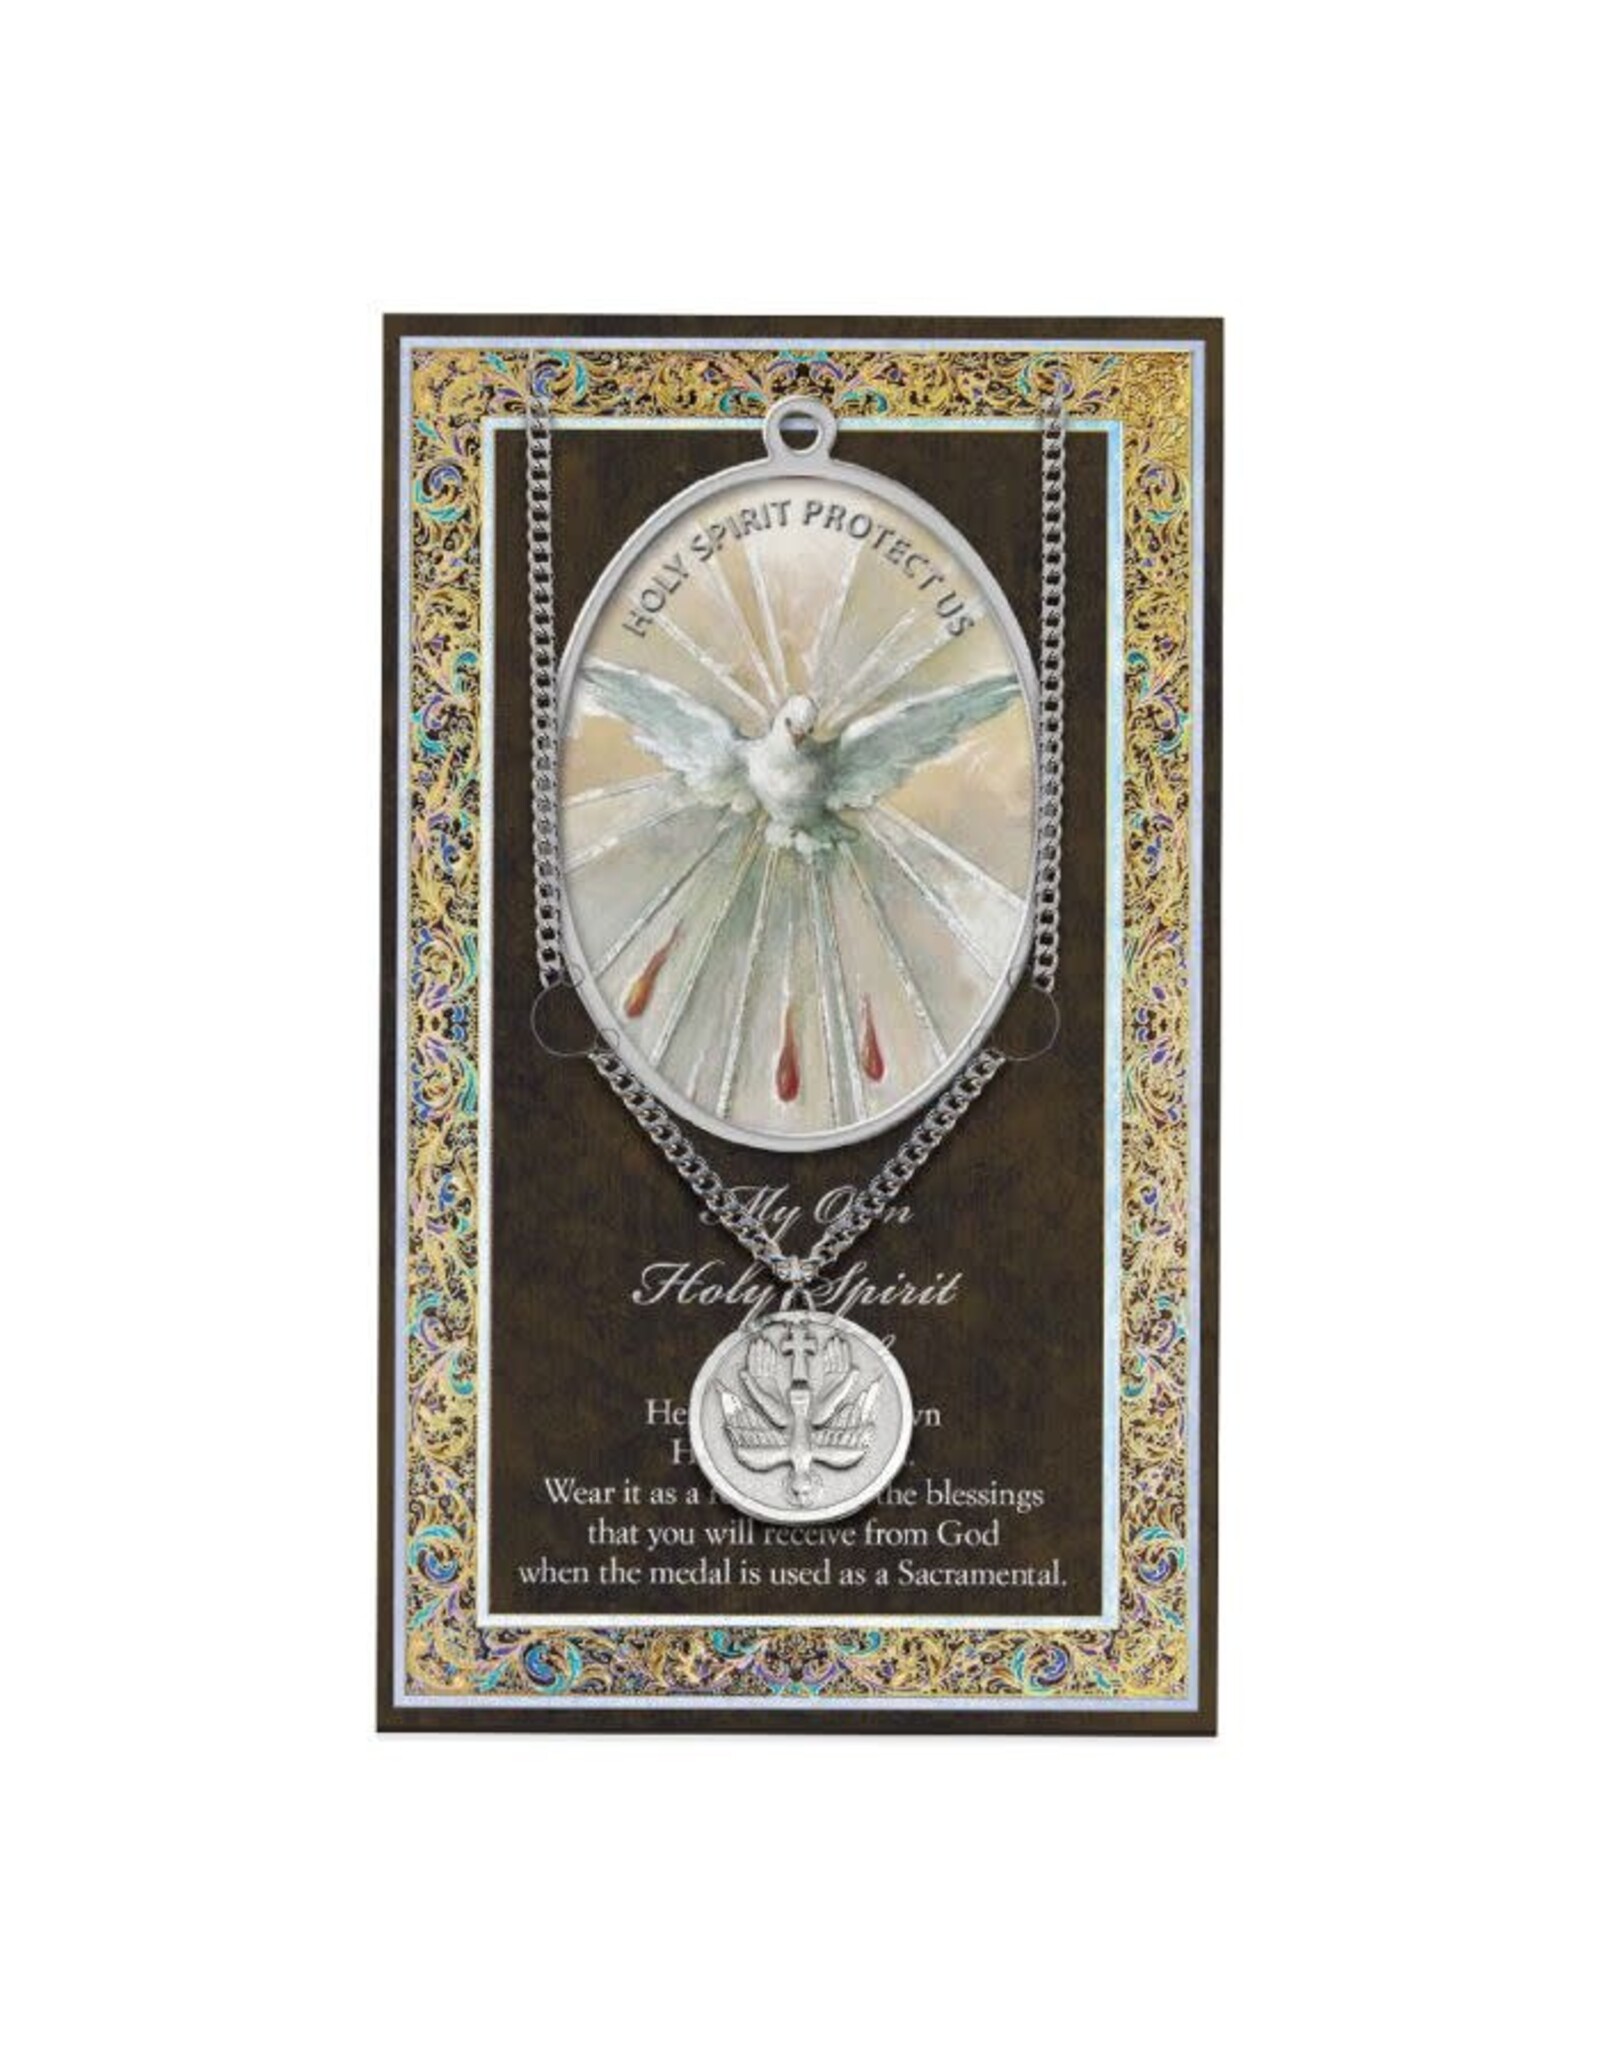 Hirten Genuine Pewter Medal with Prayer Card - Holy Spirit